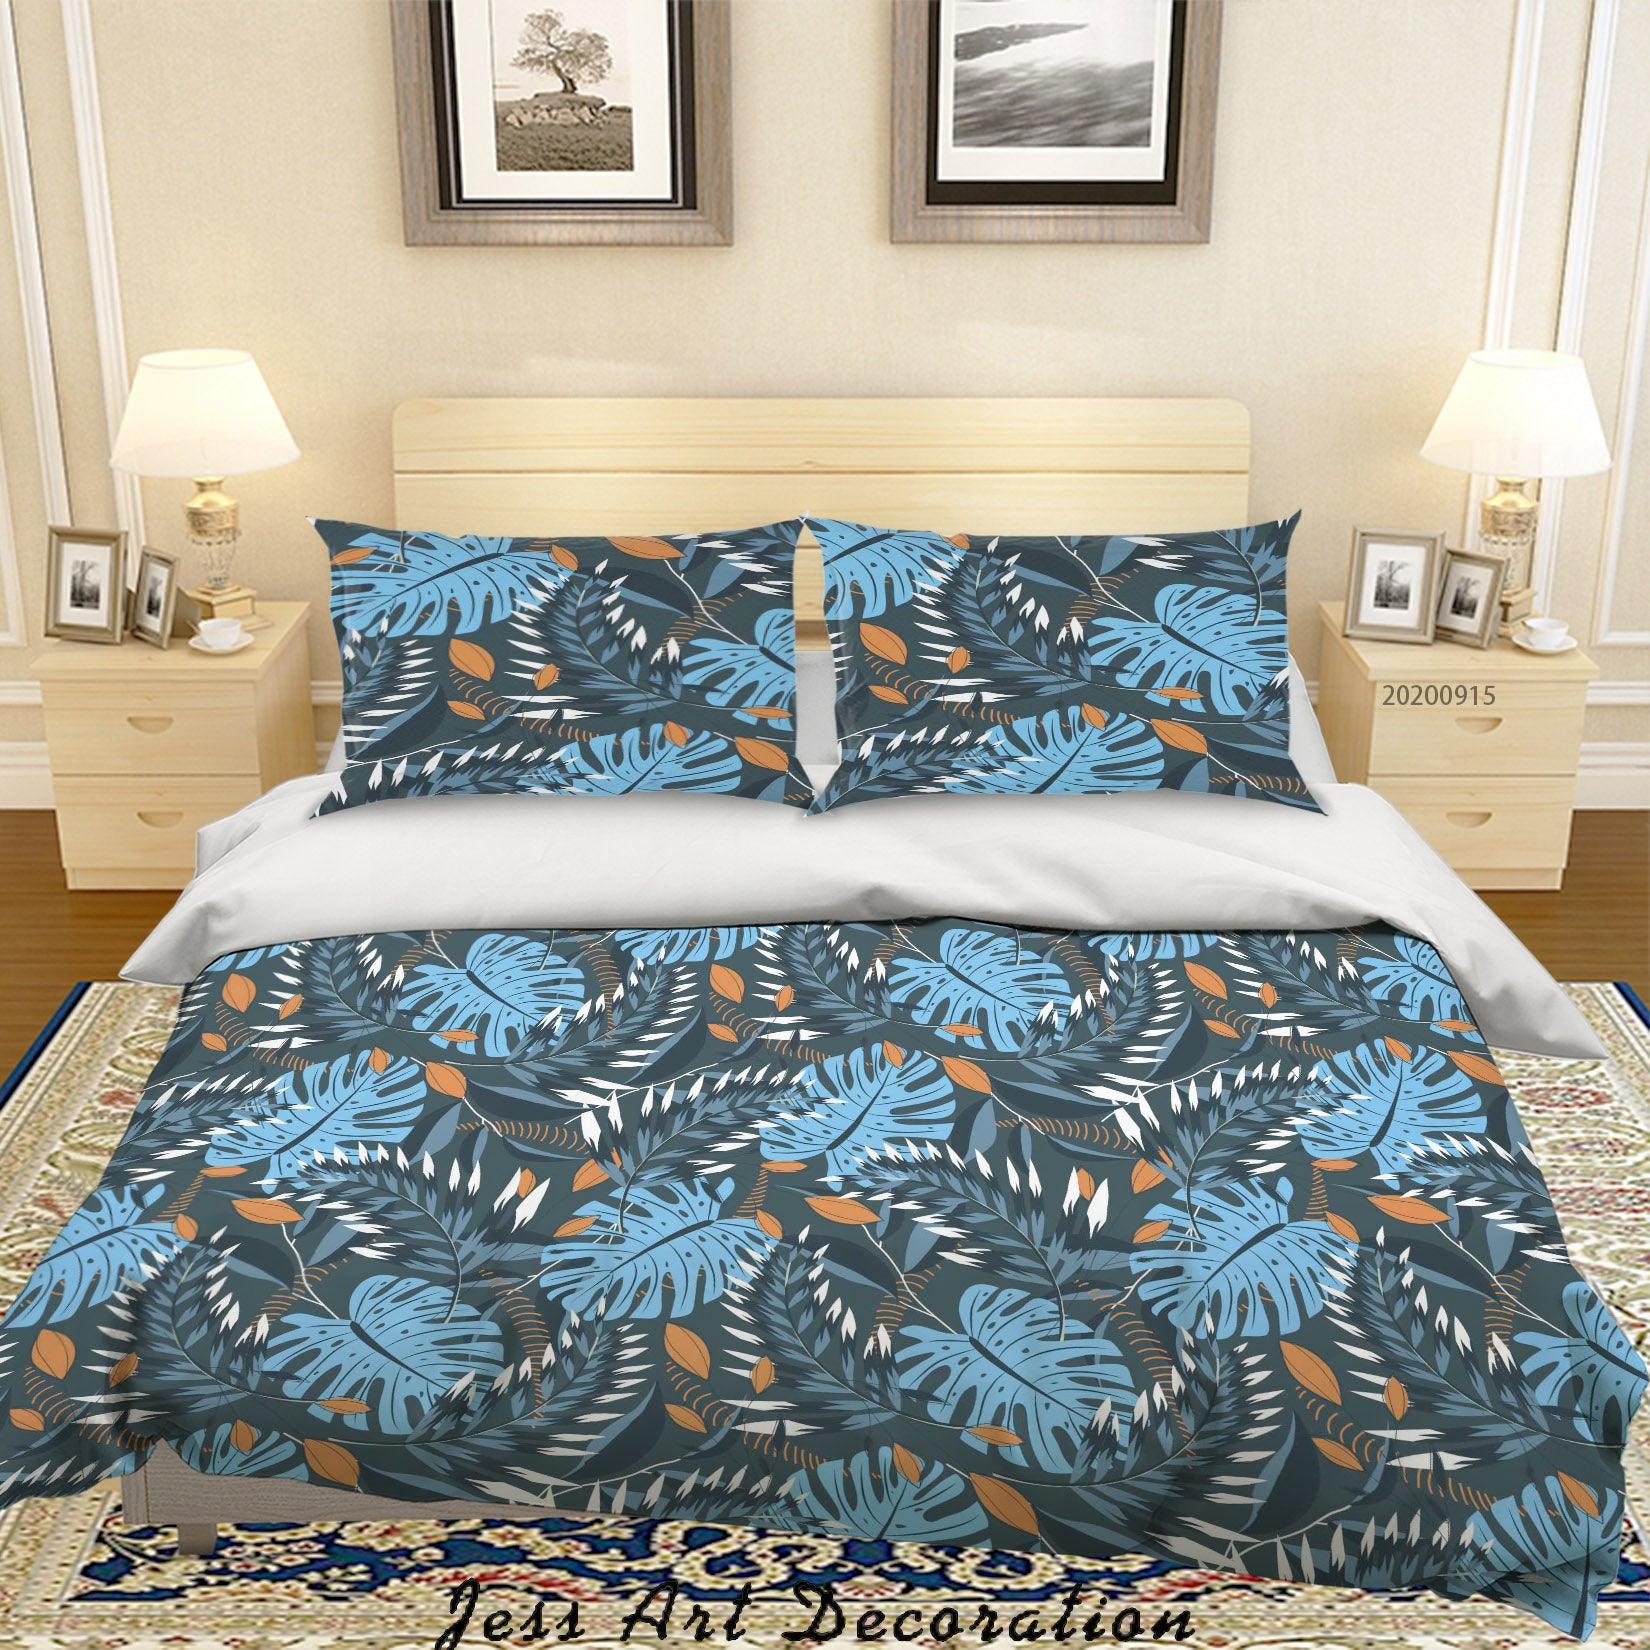 3D Plant Leaves Flower Pattern Quilt Cover Set Bedding Set Duvet Cover Pillowcases WJ 9029- Jess Art Decoration